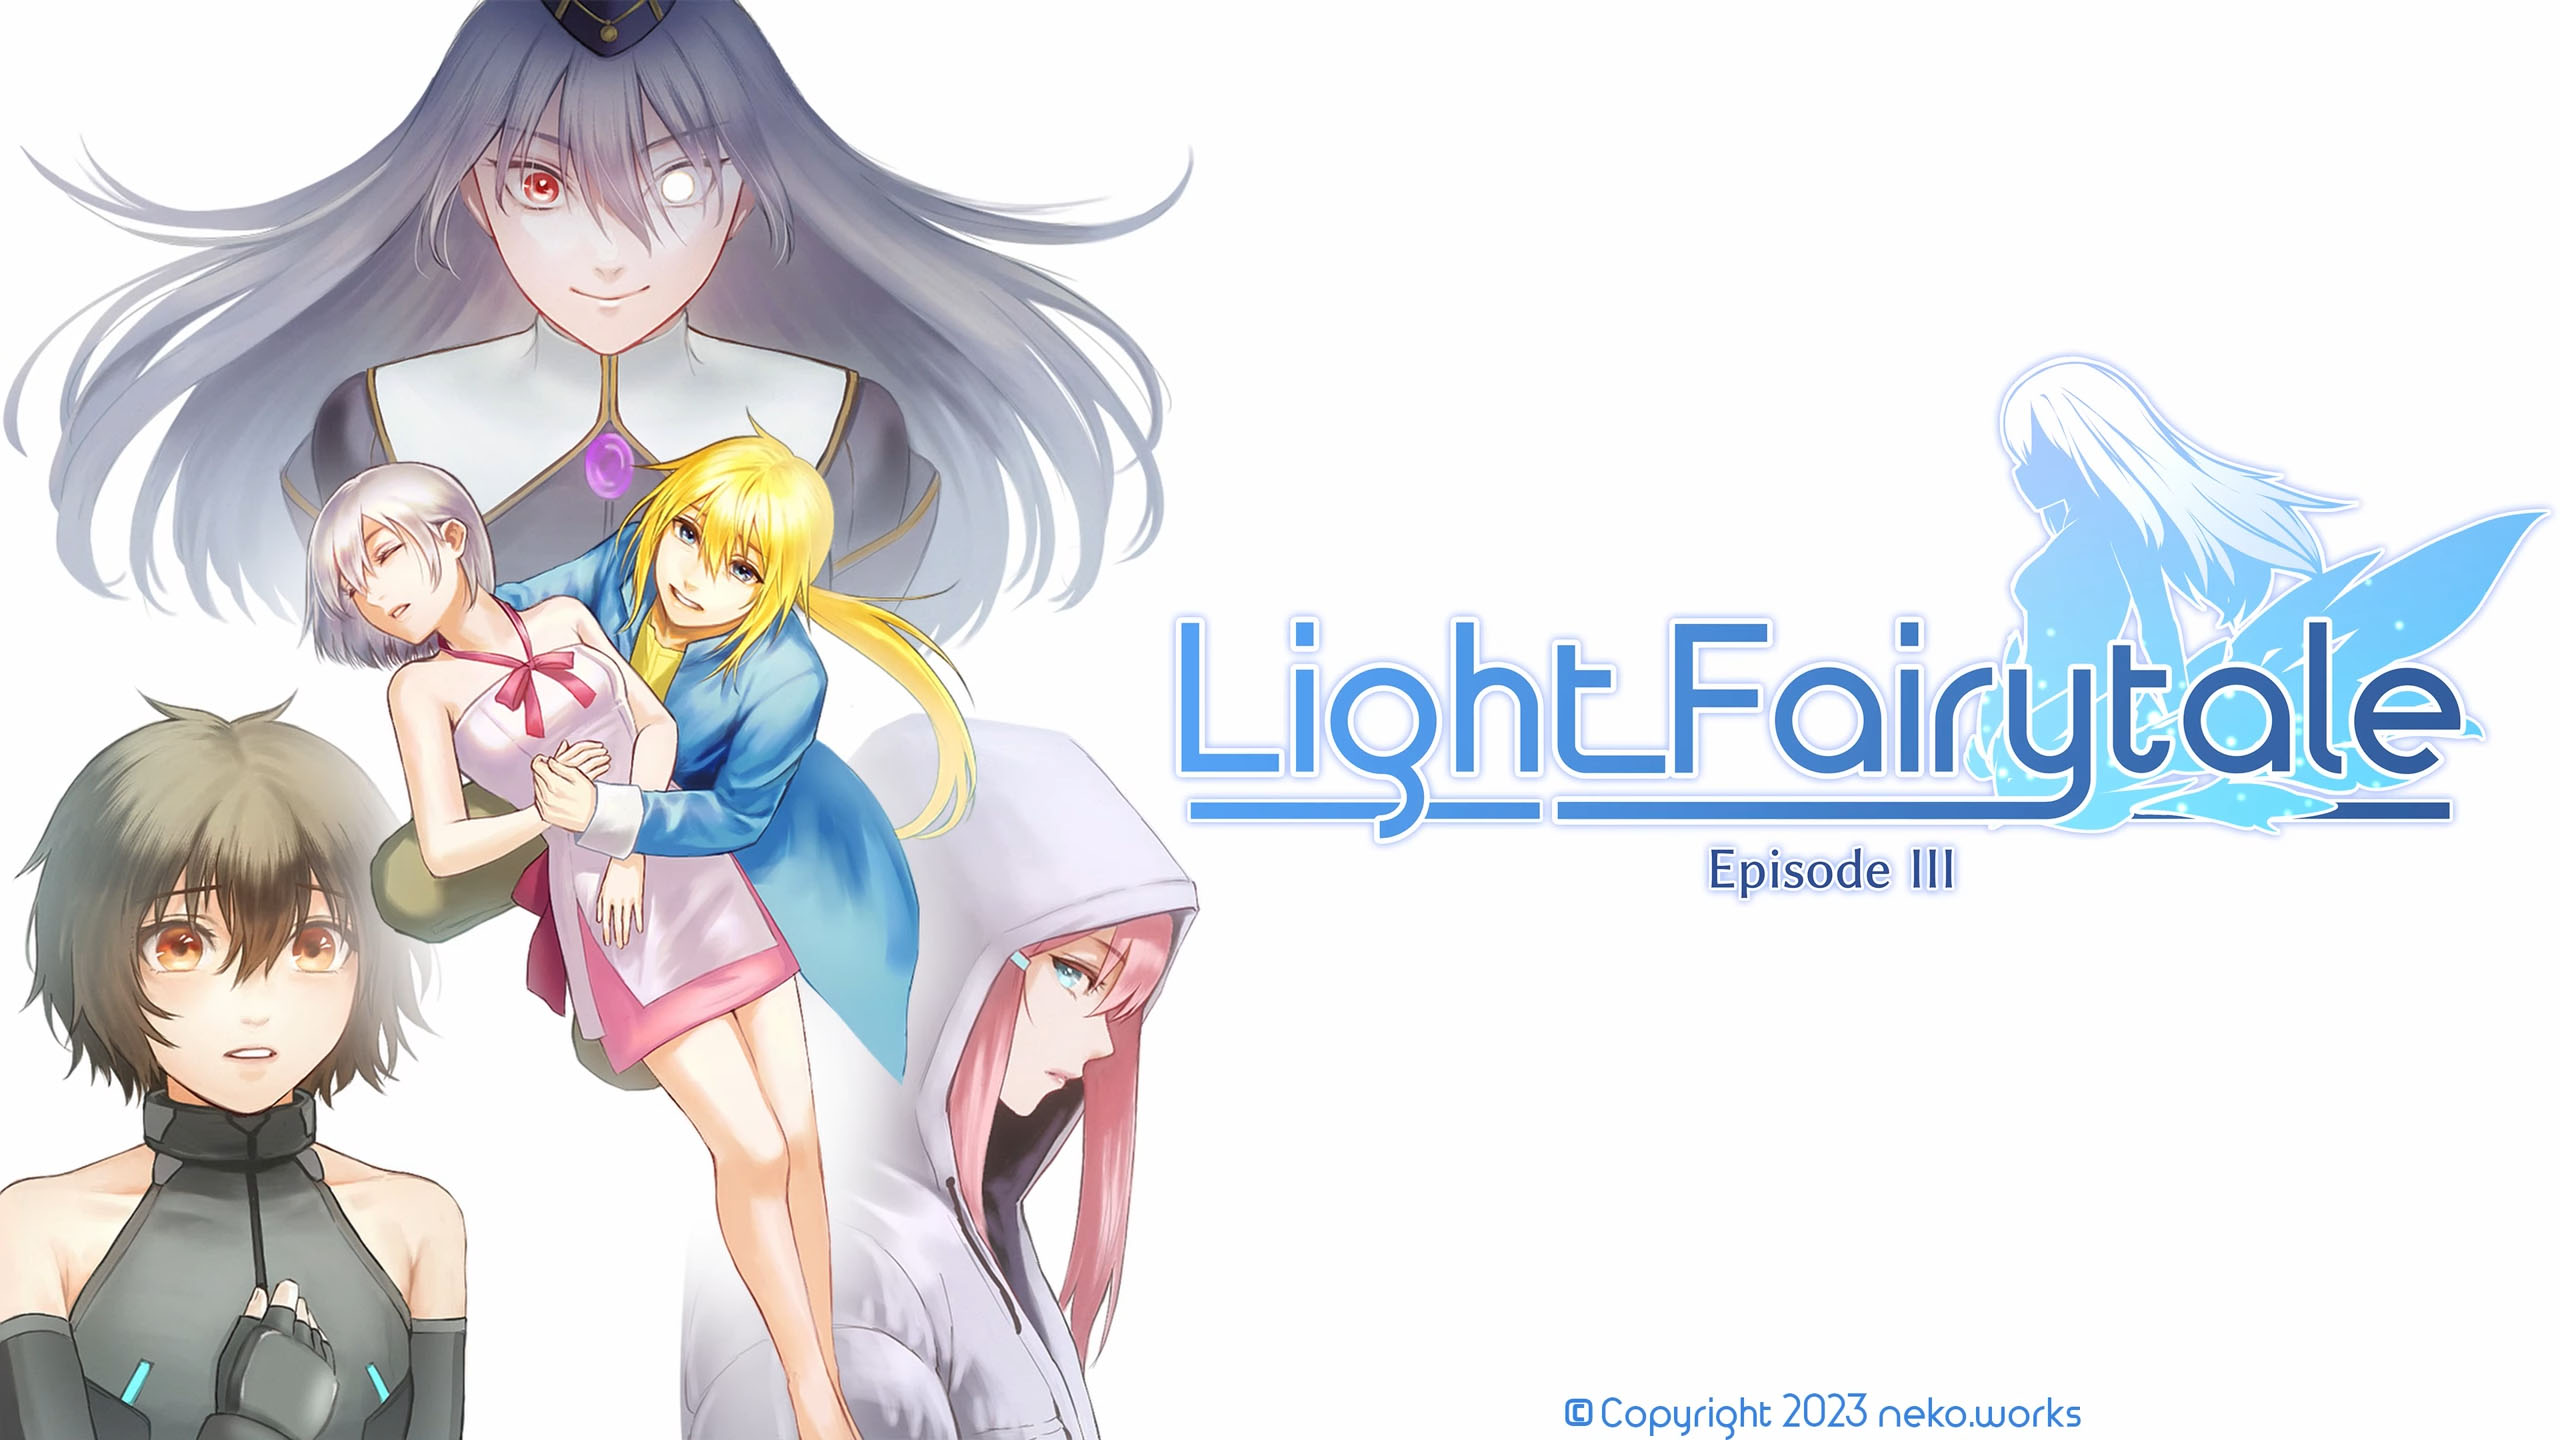 Light Fairytale Episode III gets new teaser trailer - Niche Gamer